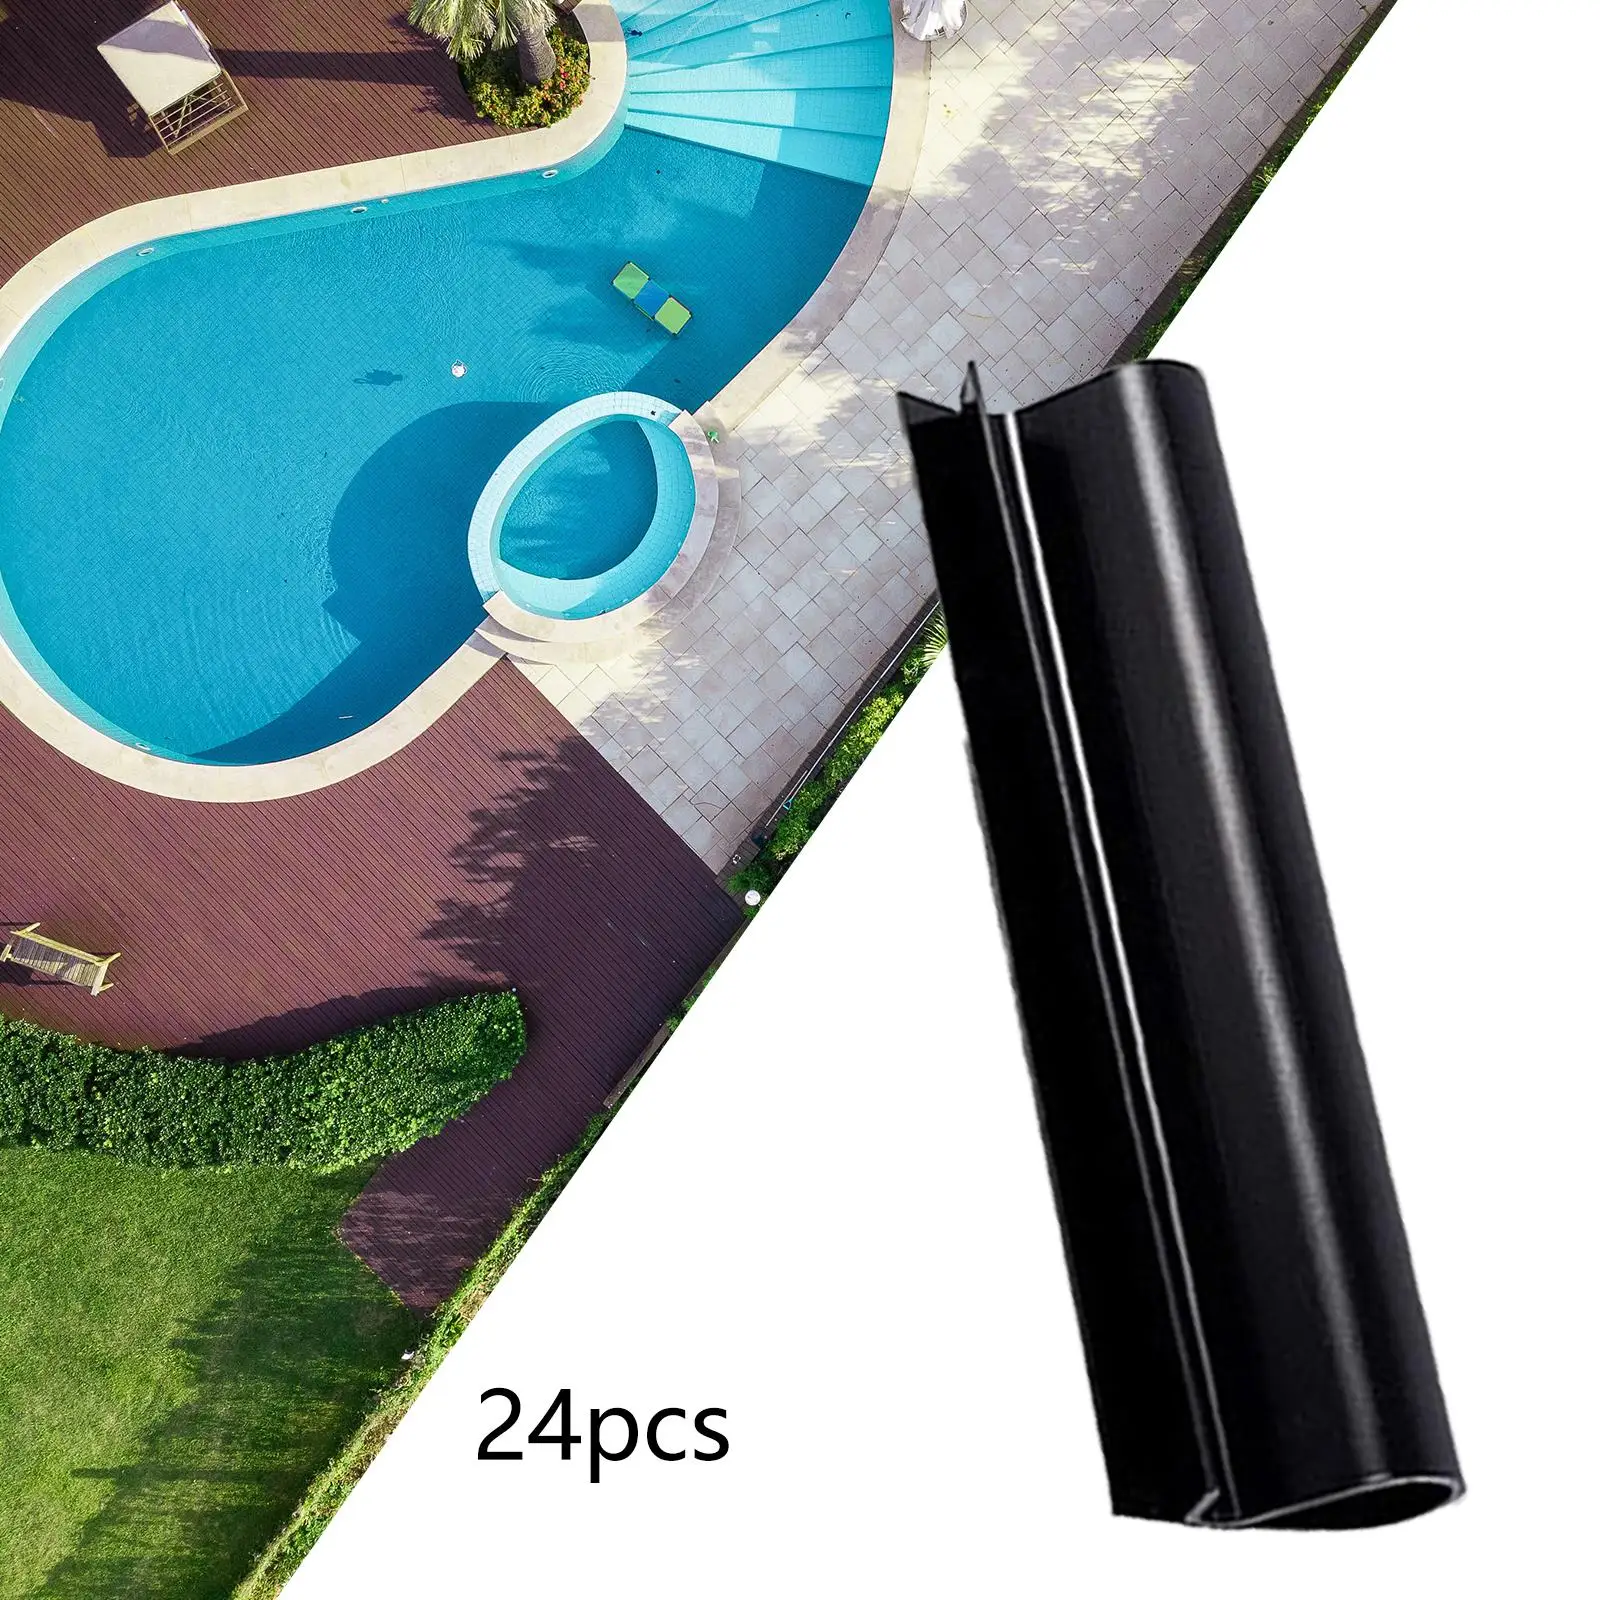 24Pcs 8cm pool lid Clips Pool Wind Guard Clips pool lid Clamps Pool Clips for pool lid Towel Photos clothes